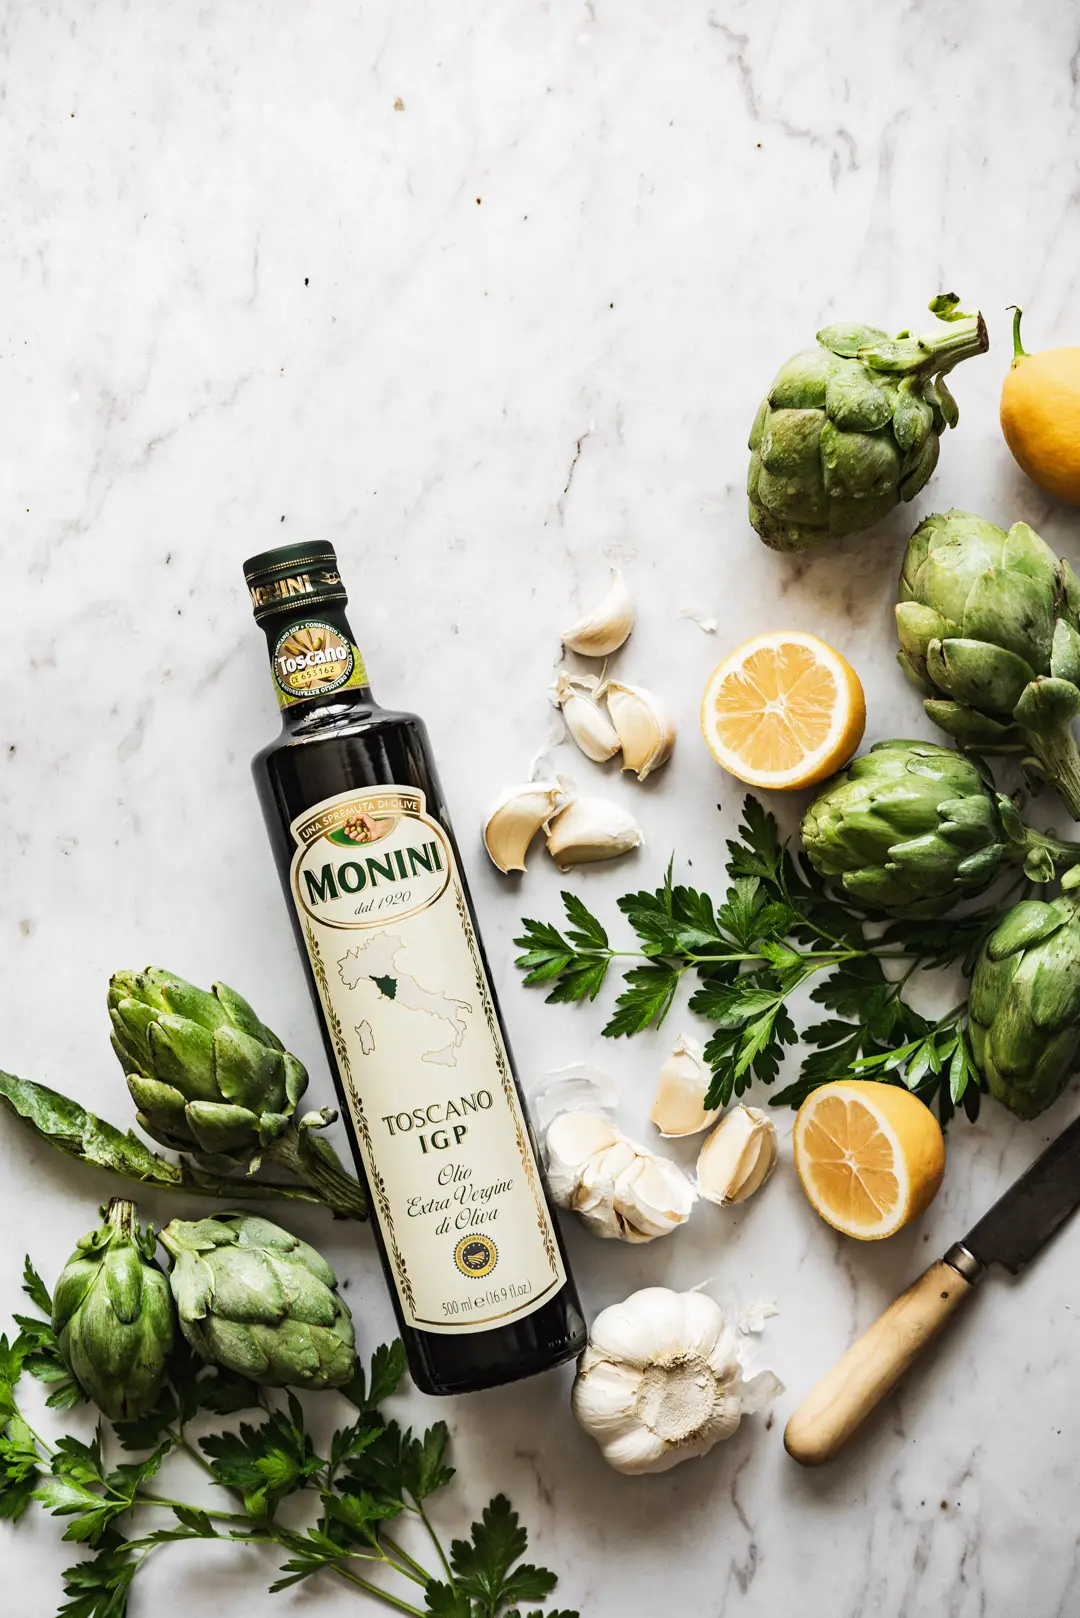 Monini Toscano IGP Italian Extra Virgin Olive Oil